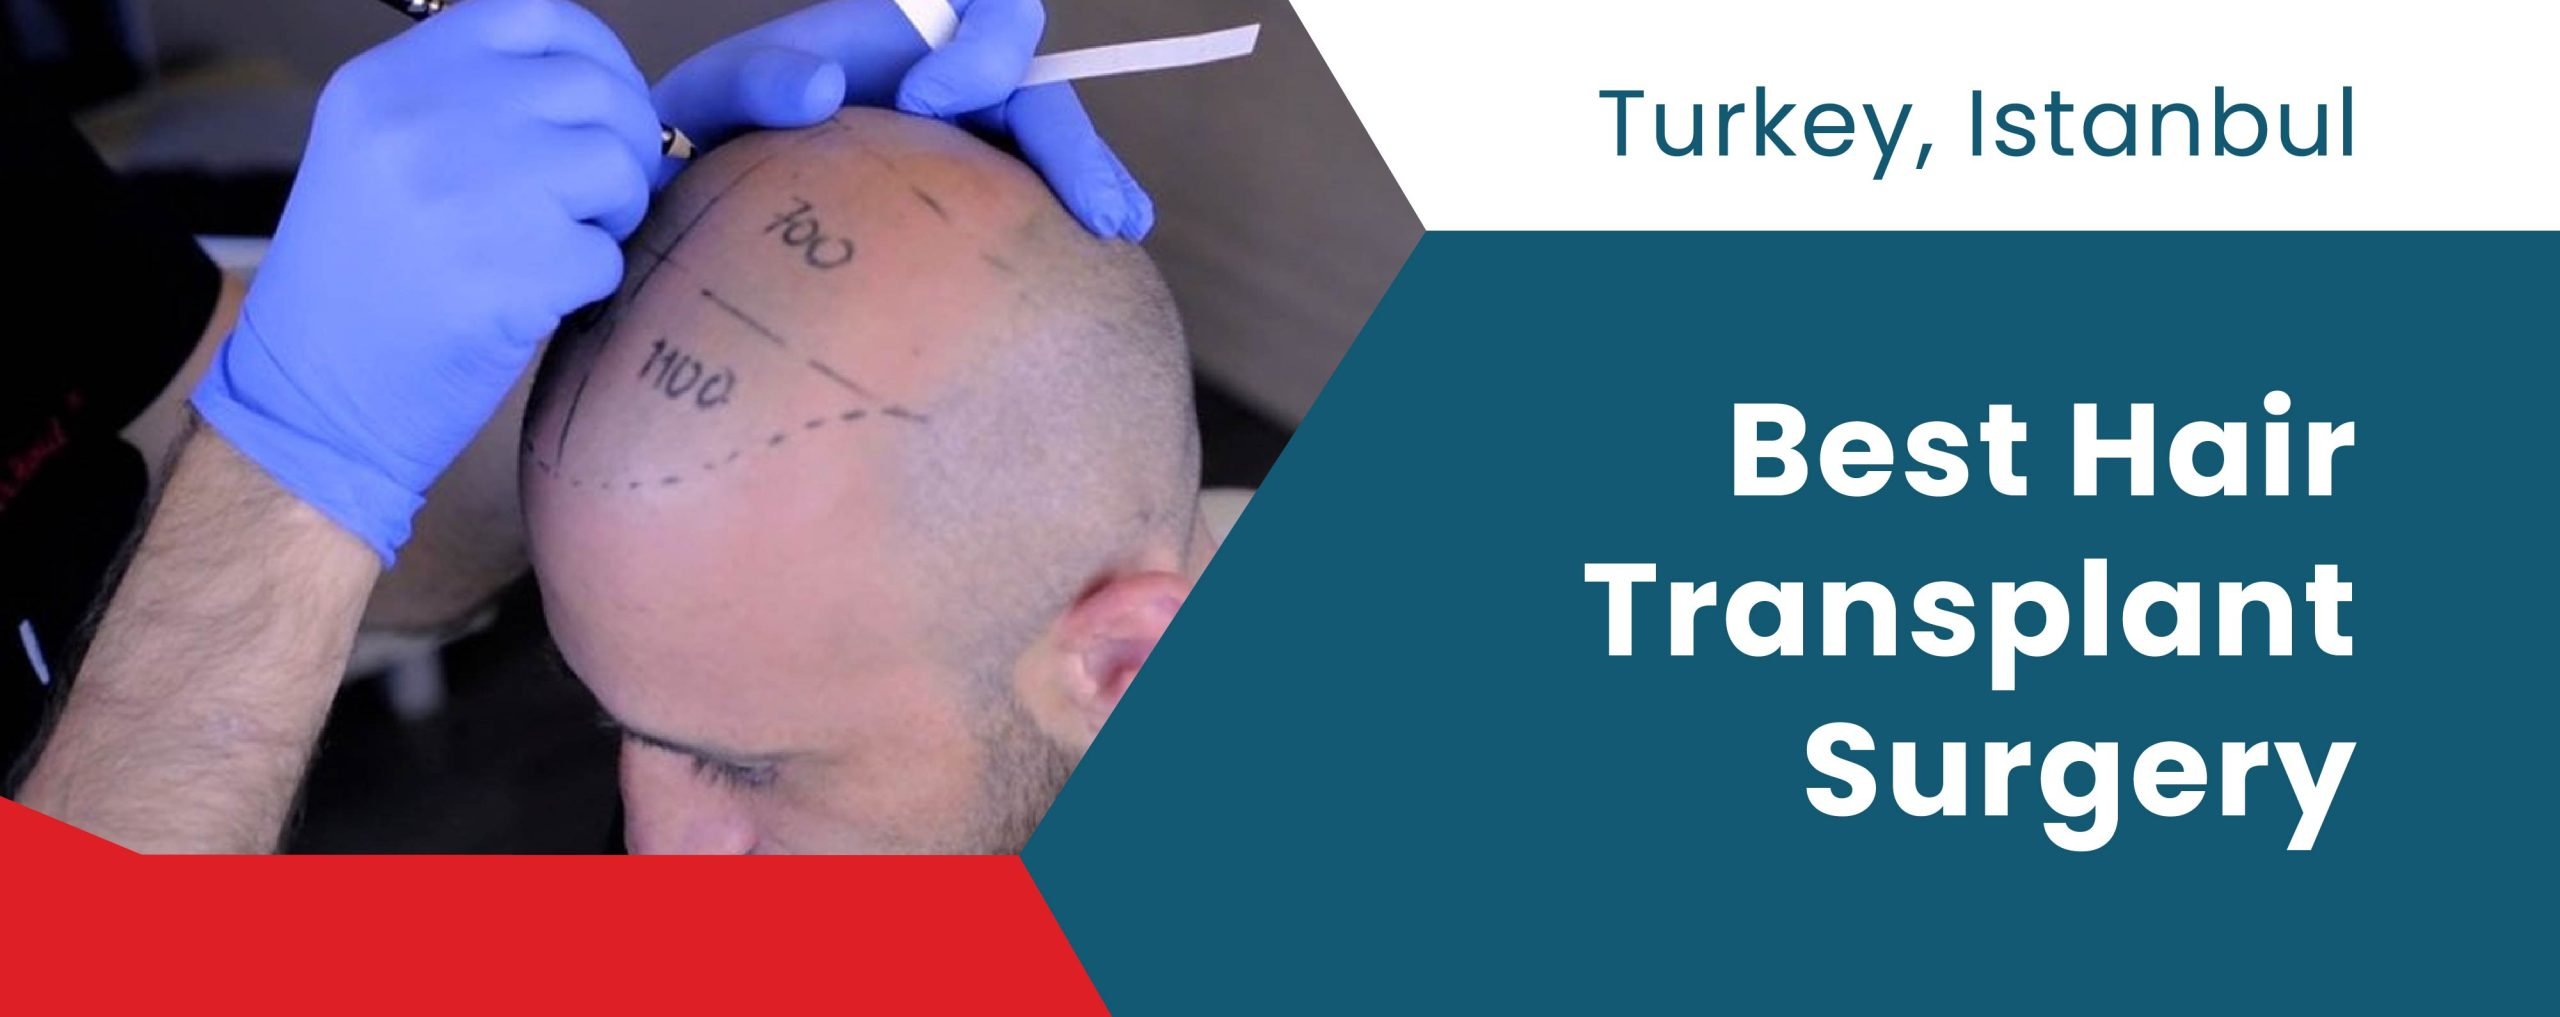 Best Hair Transplant Surgery In Turkey | ClinMedica